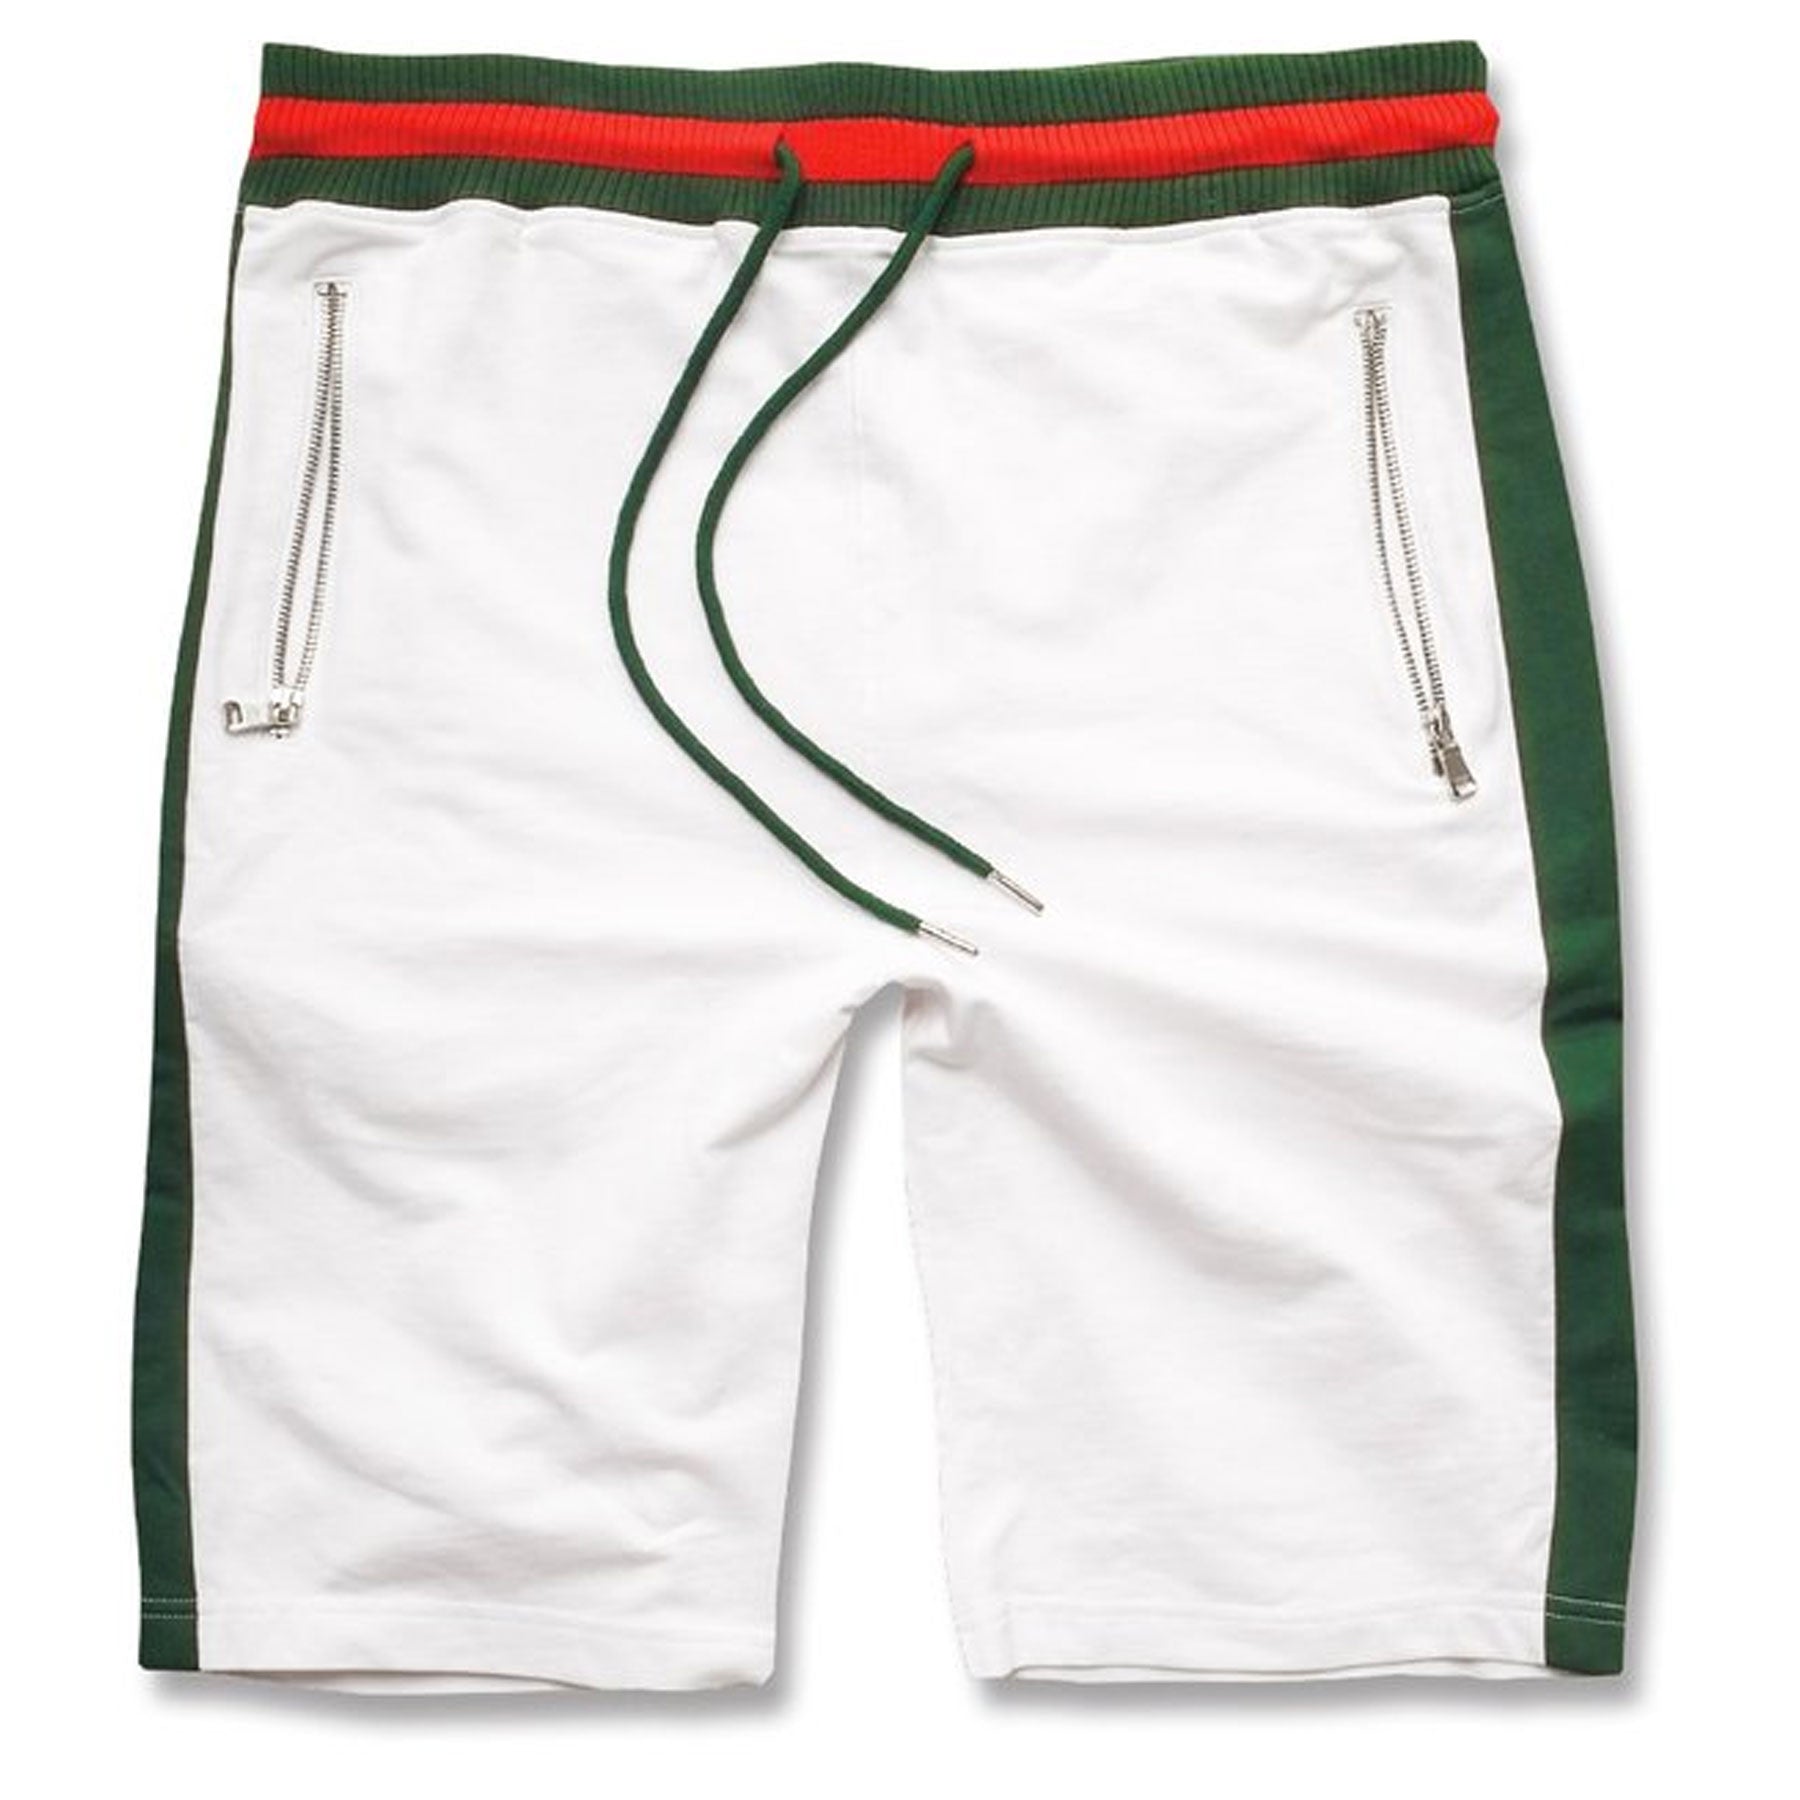 gucci inspired shorts